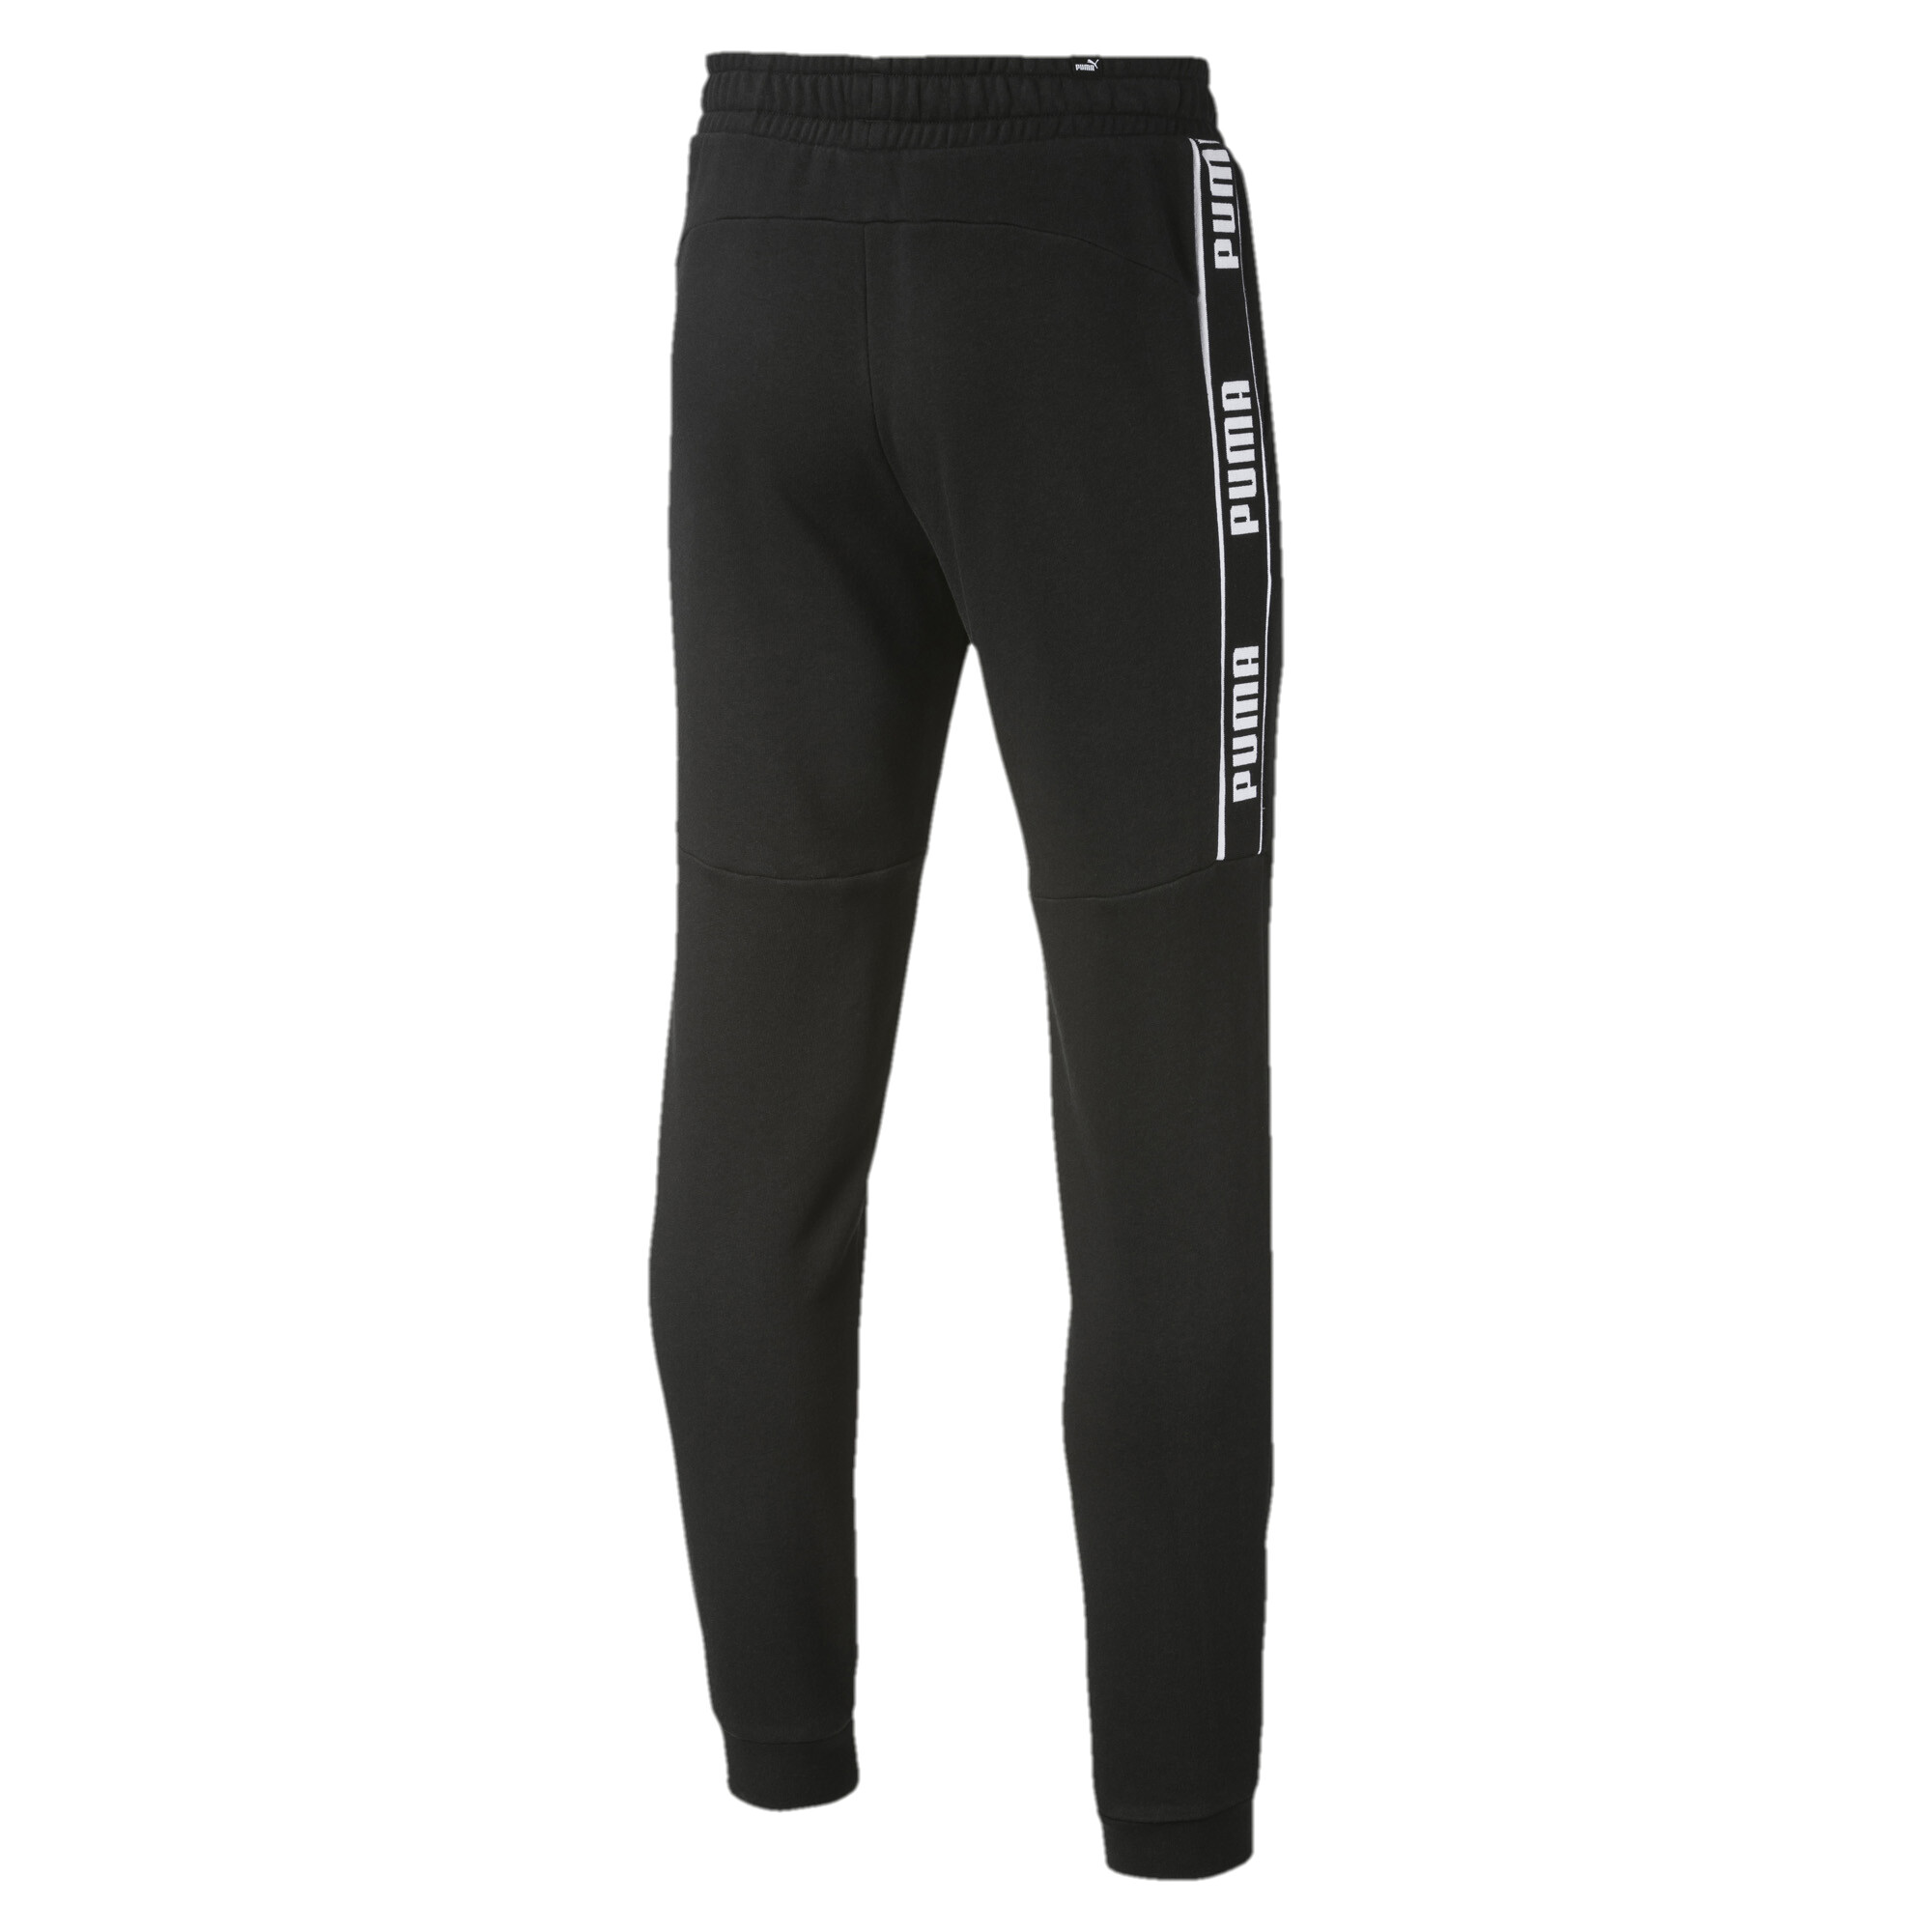 Men's Puma Amplified's Sweatpants, Black, Size XS, Clothing